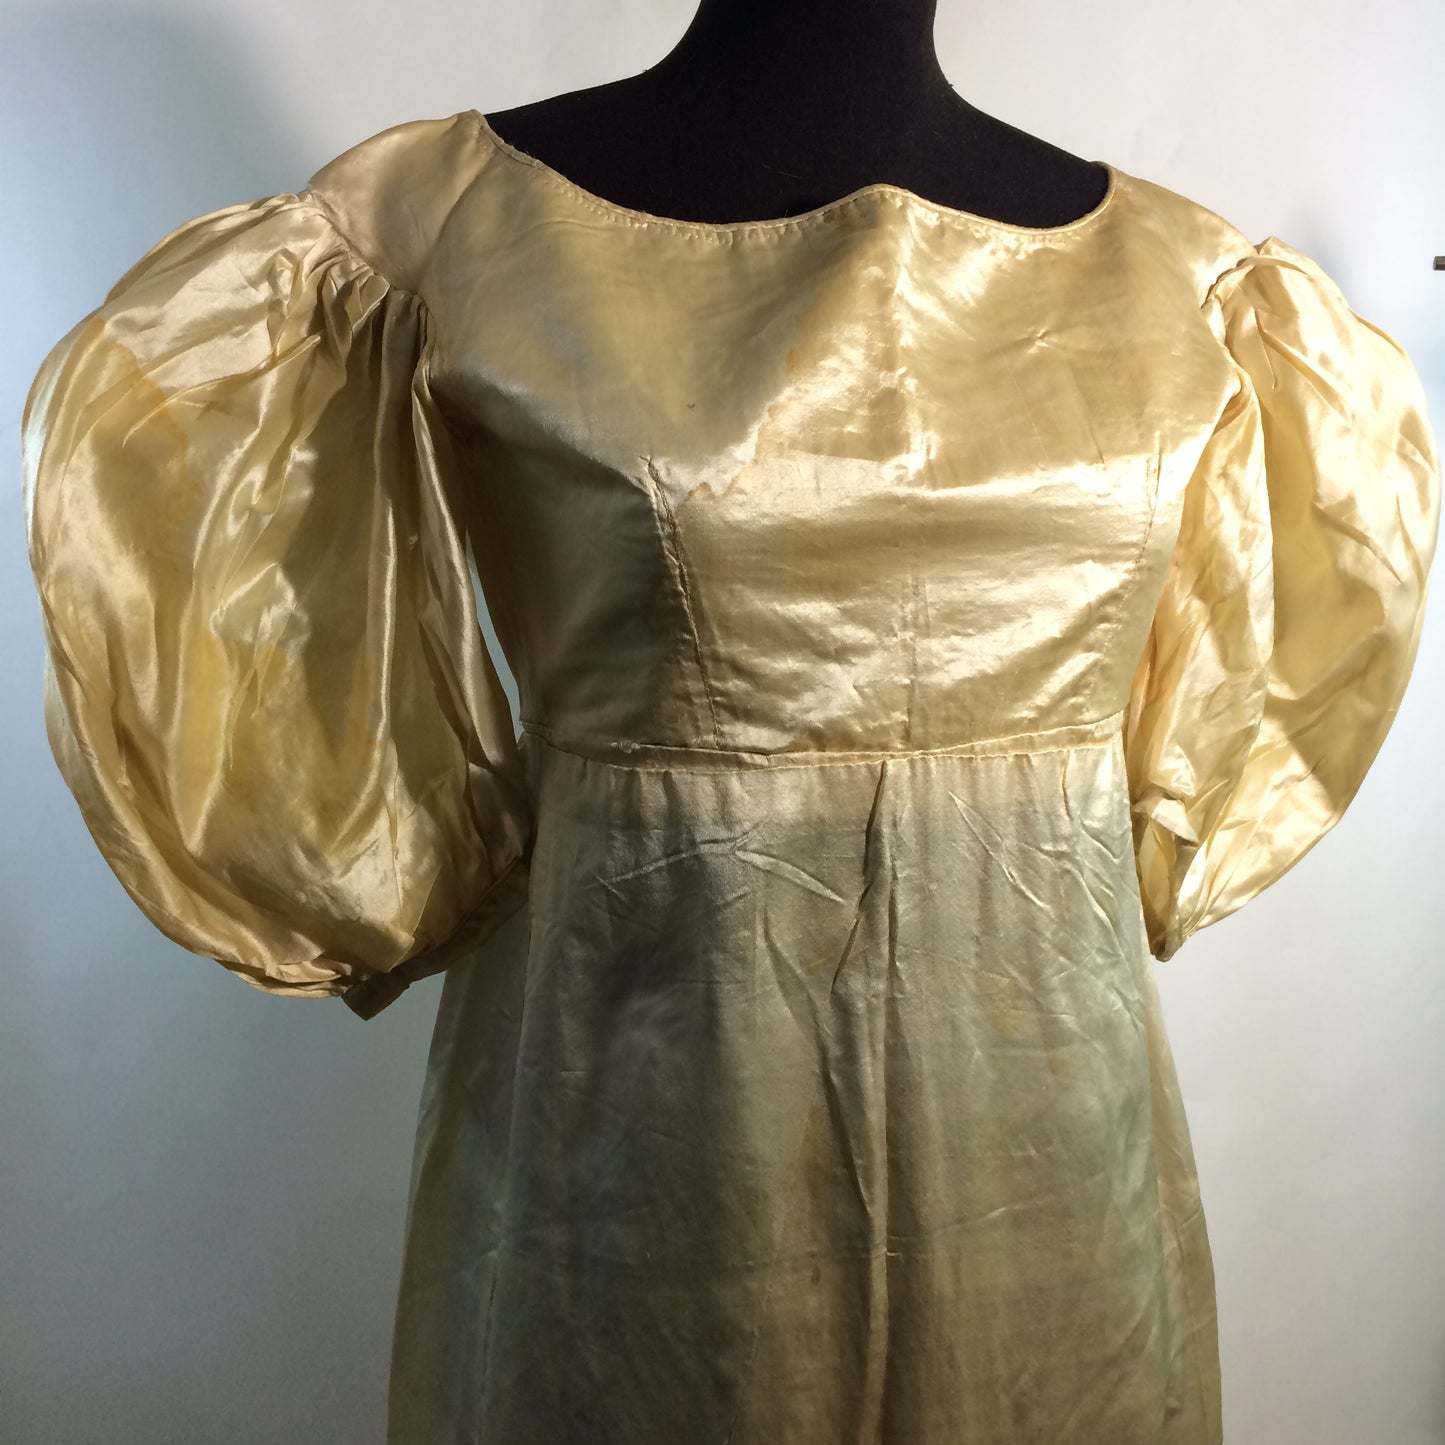 Candlelight Silk Regency Style Wedding Dress, Bodice and Corded Corset circa 1828